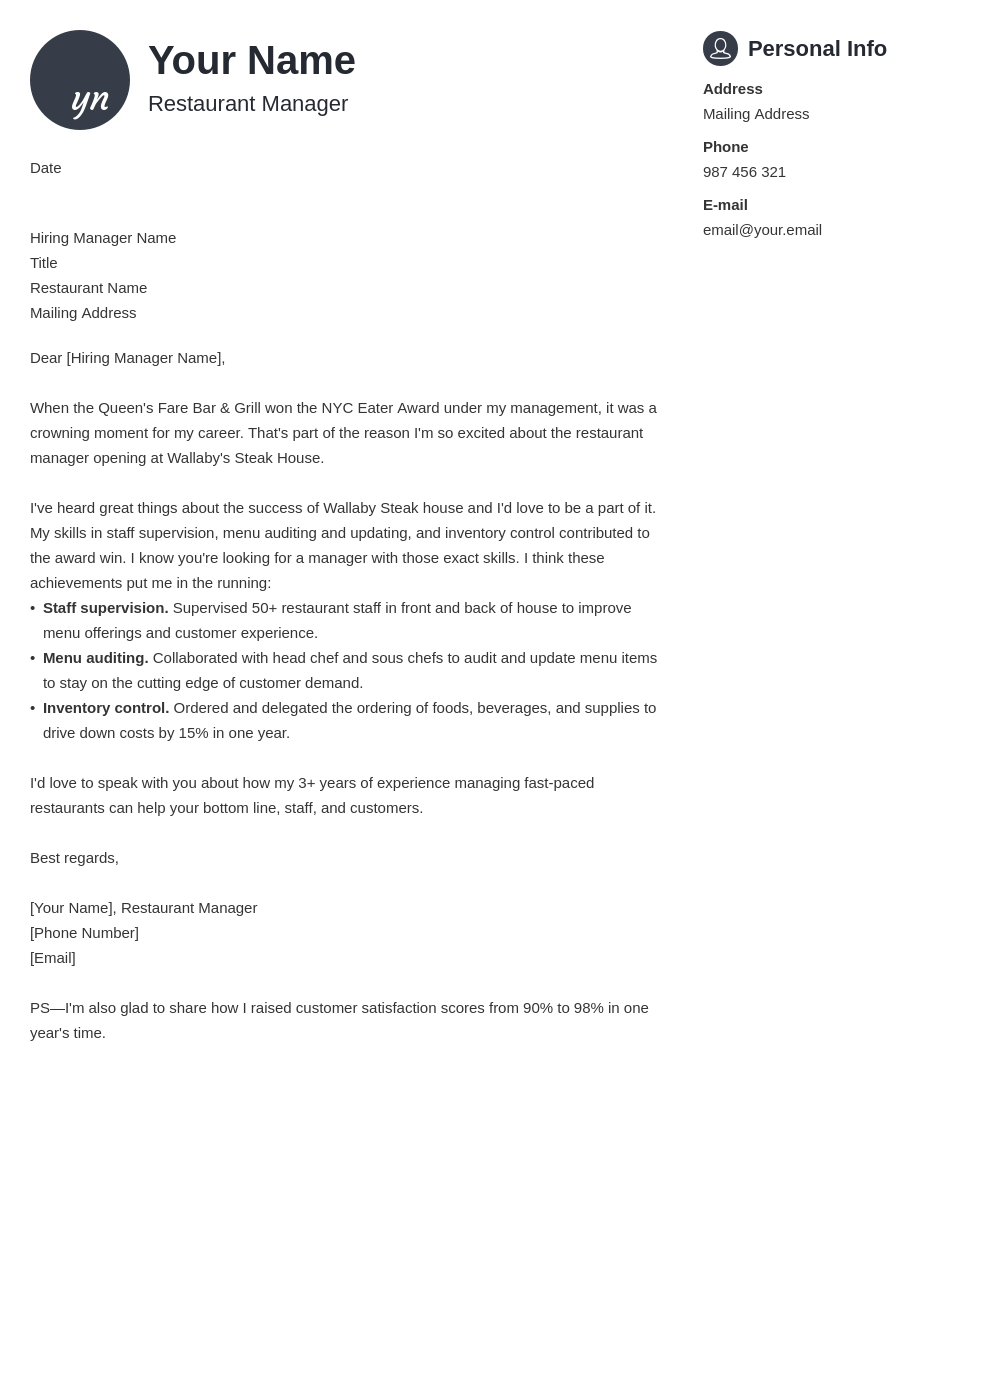 restaurant manager cover letter examples uk